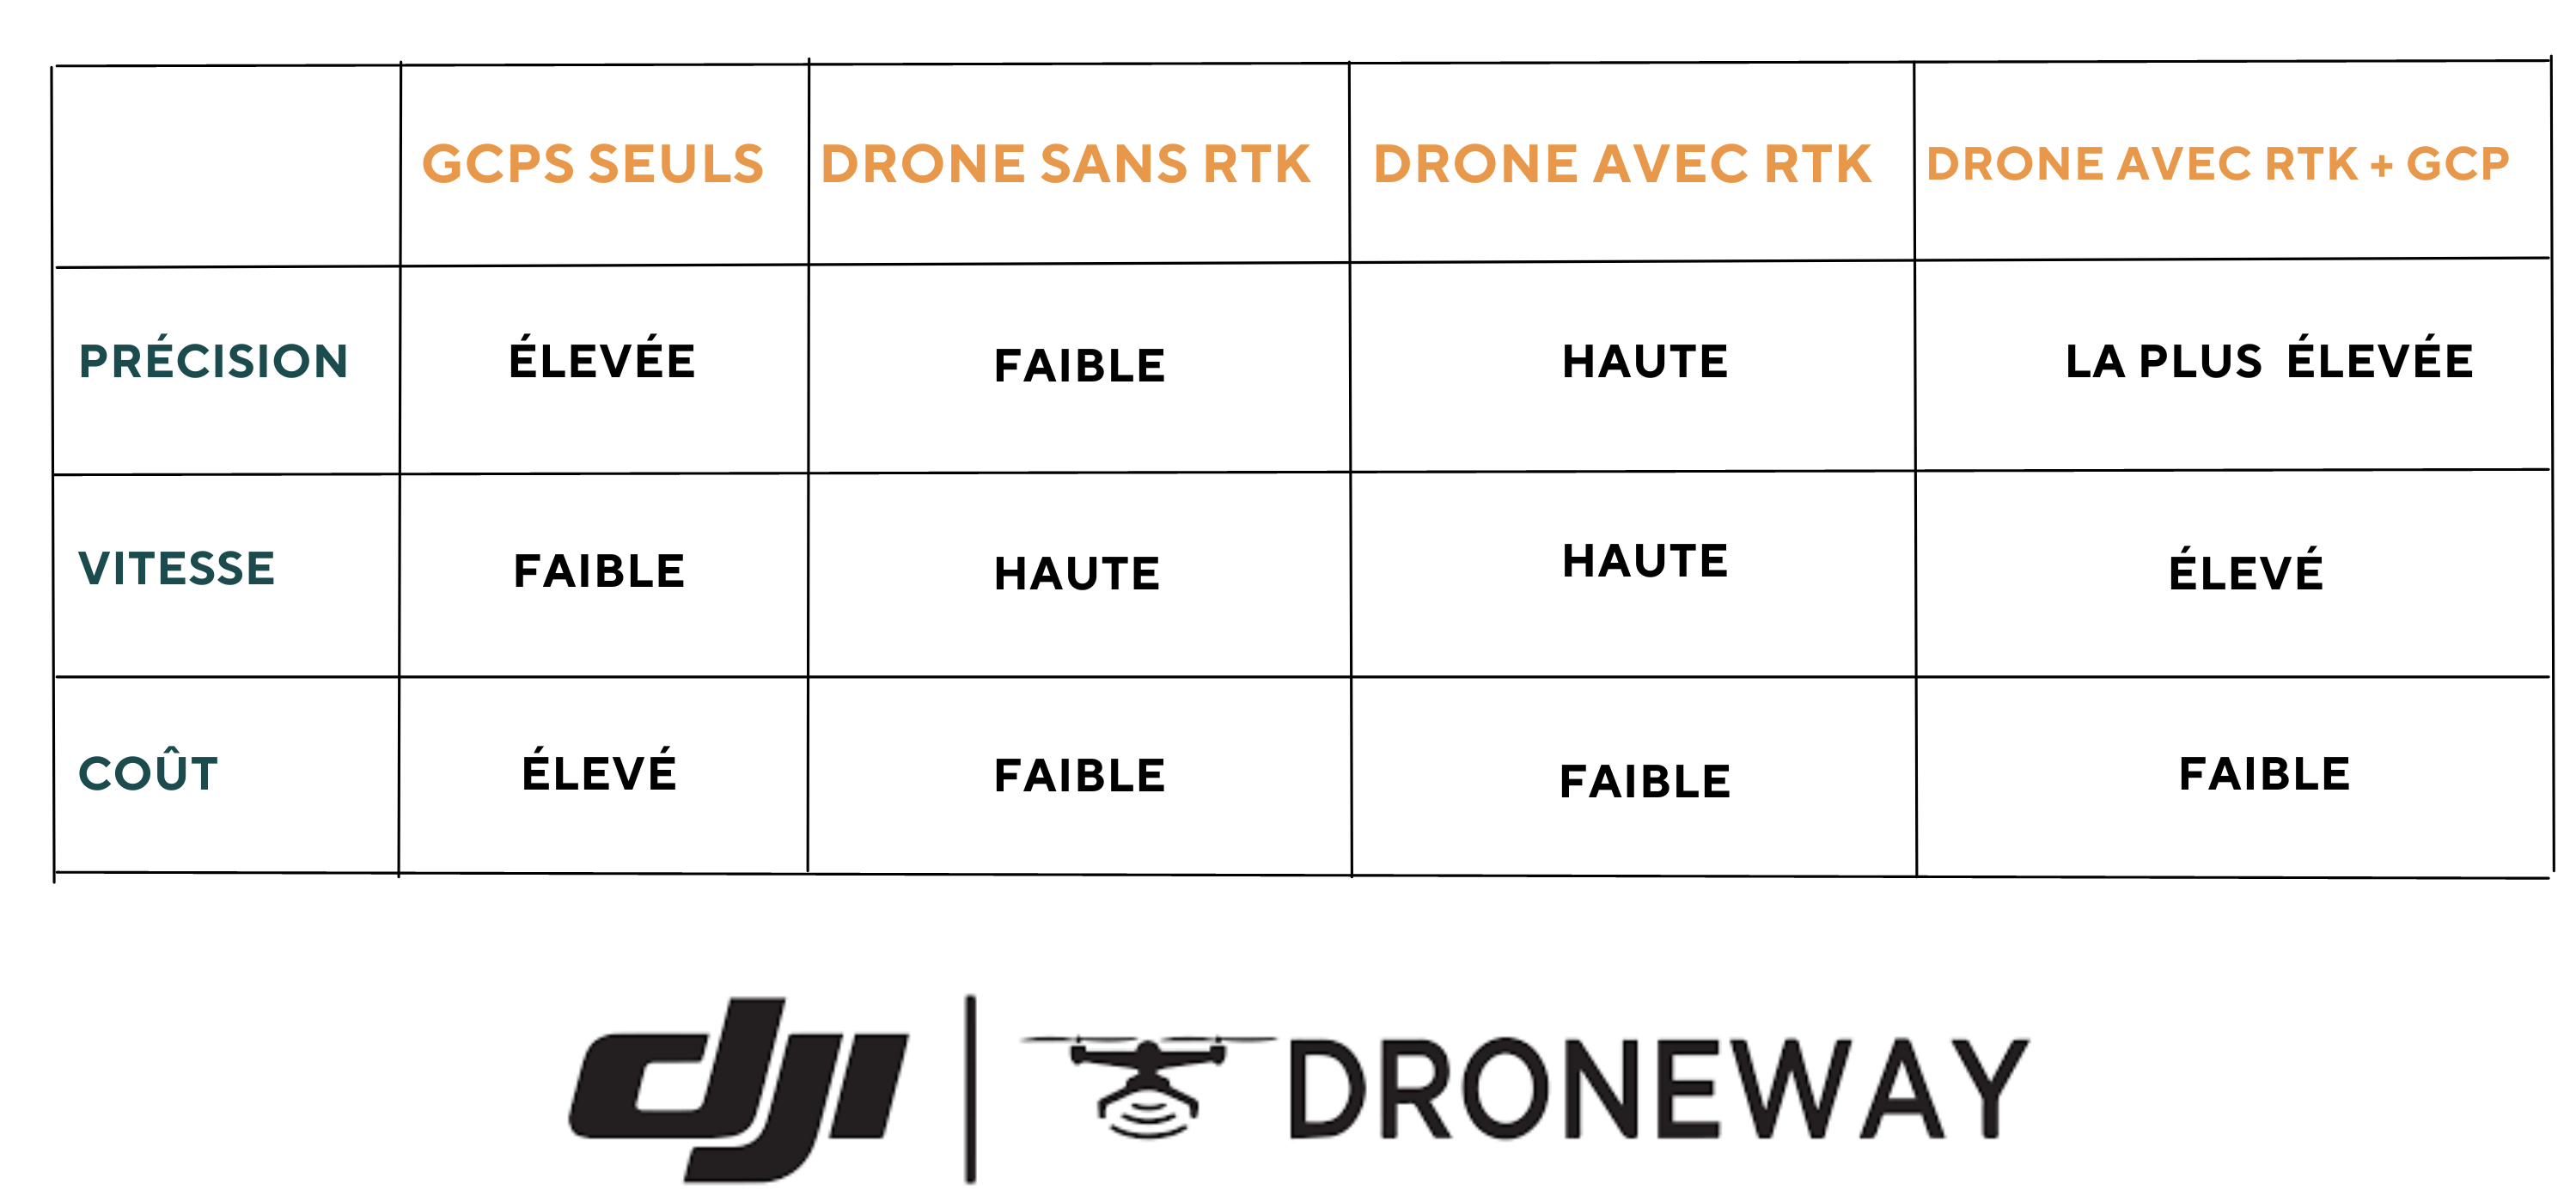 Drone-technology-comparison